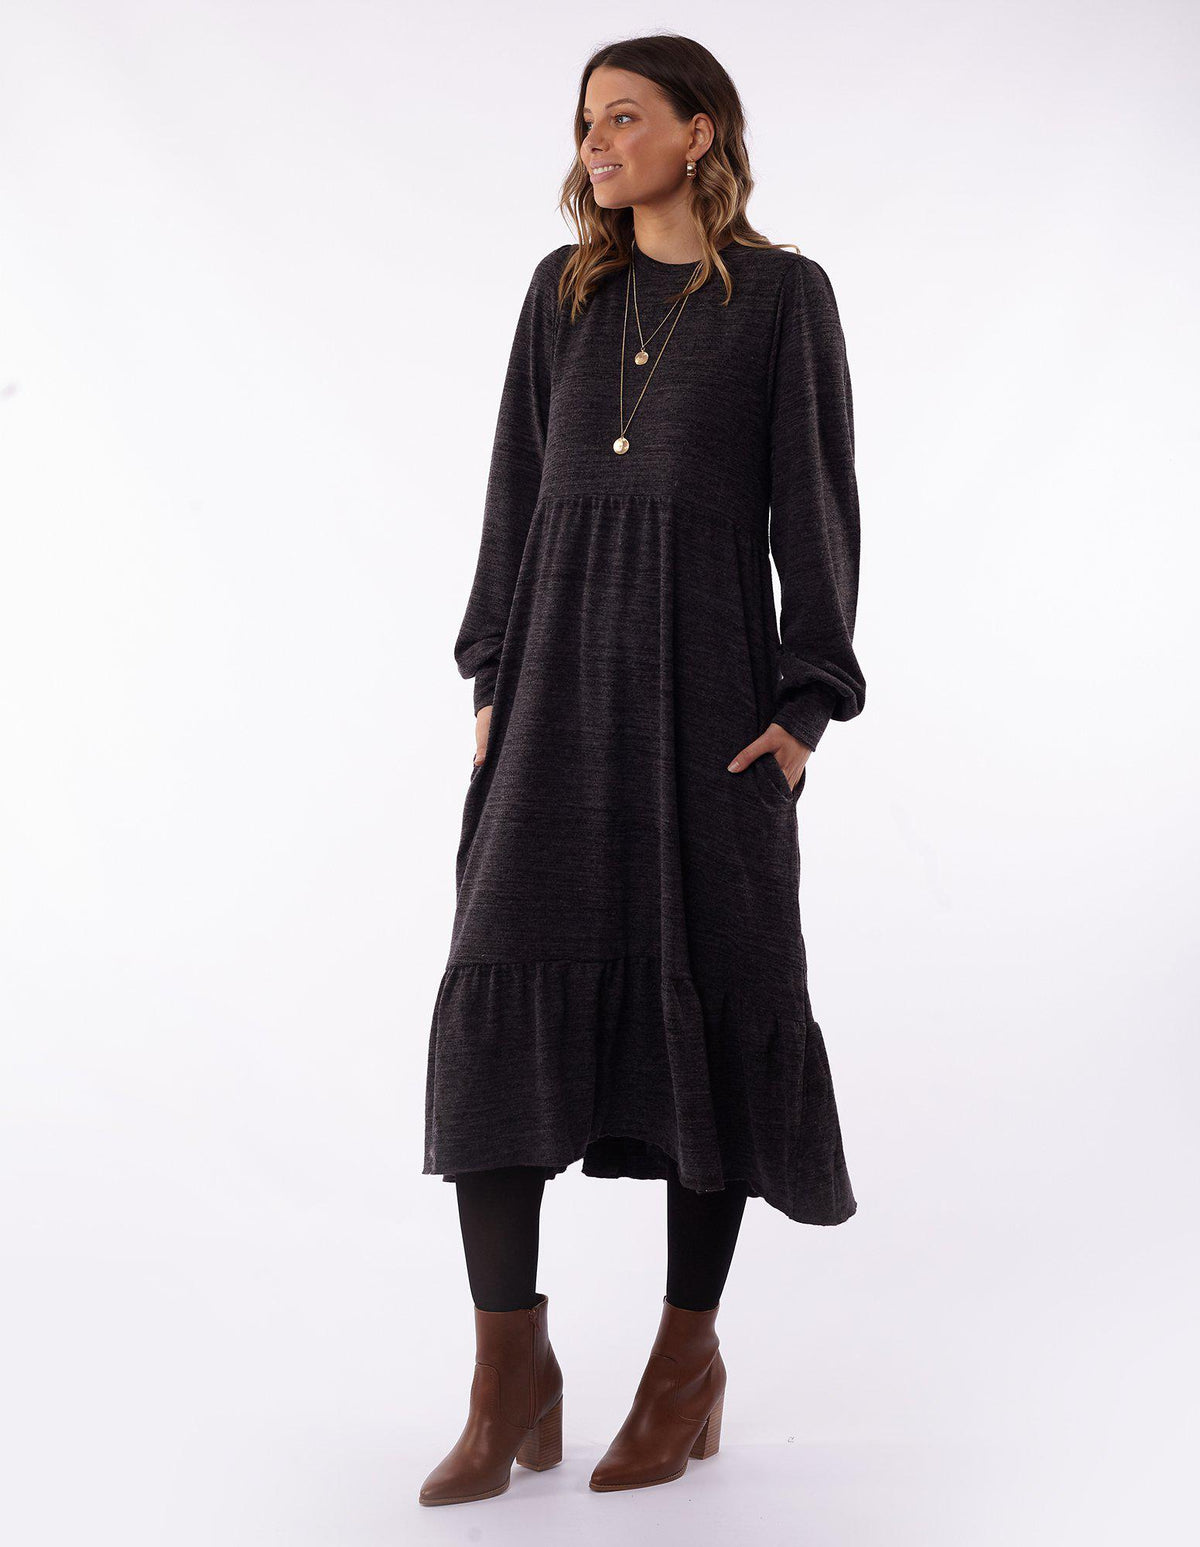 Kensington Dress - Charcoal Marle - Foxwood - FUDGE Gifts Home Lifestyle